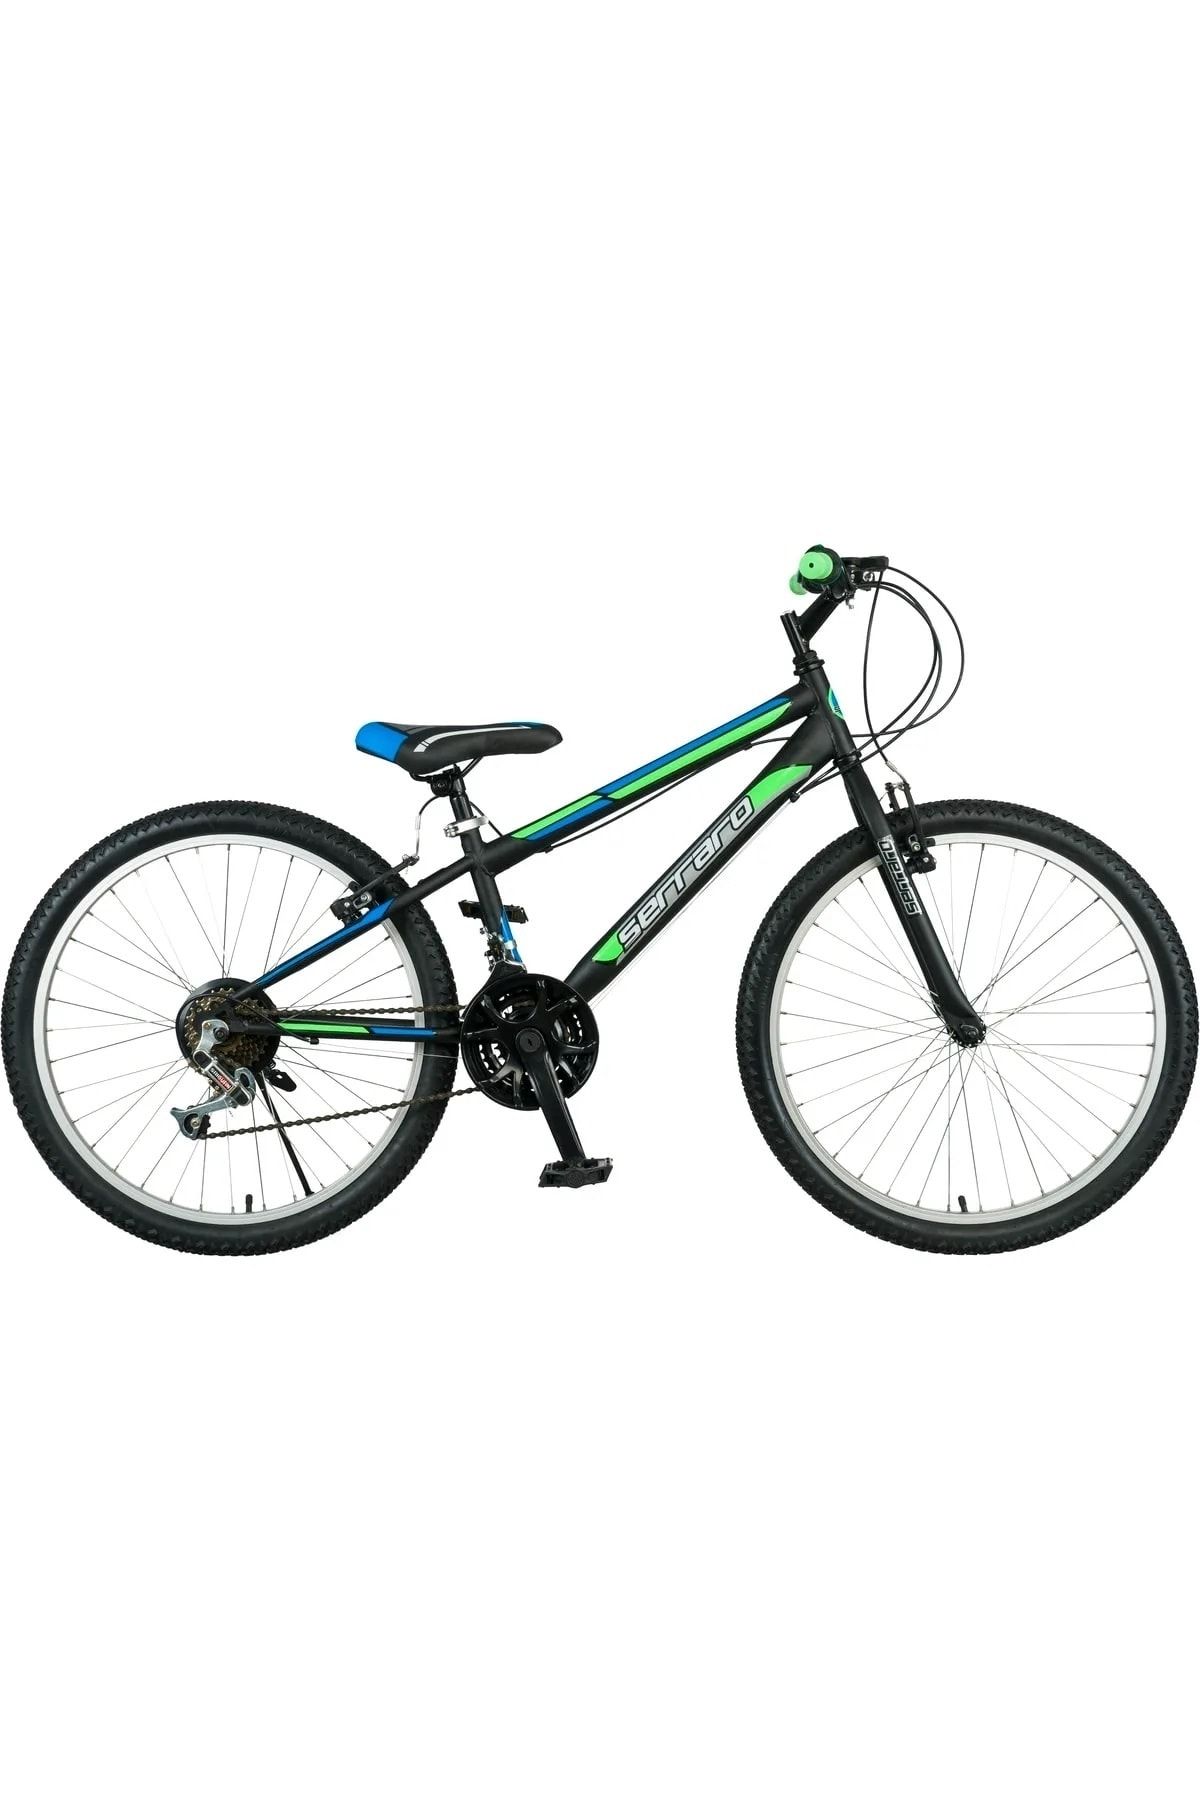 Serraro N203 New 26 Jant Bisiklet